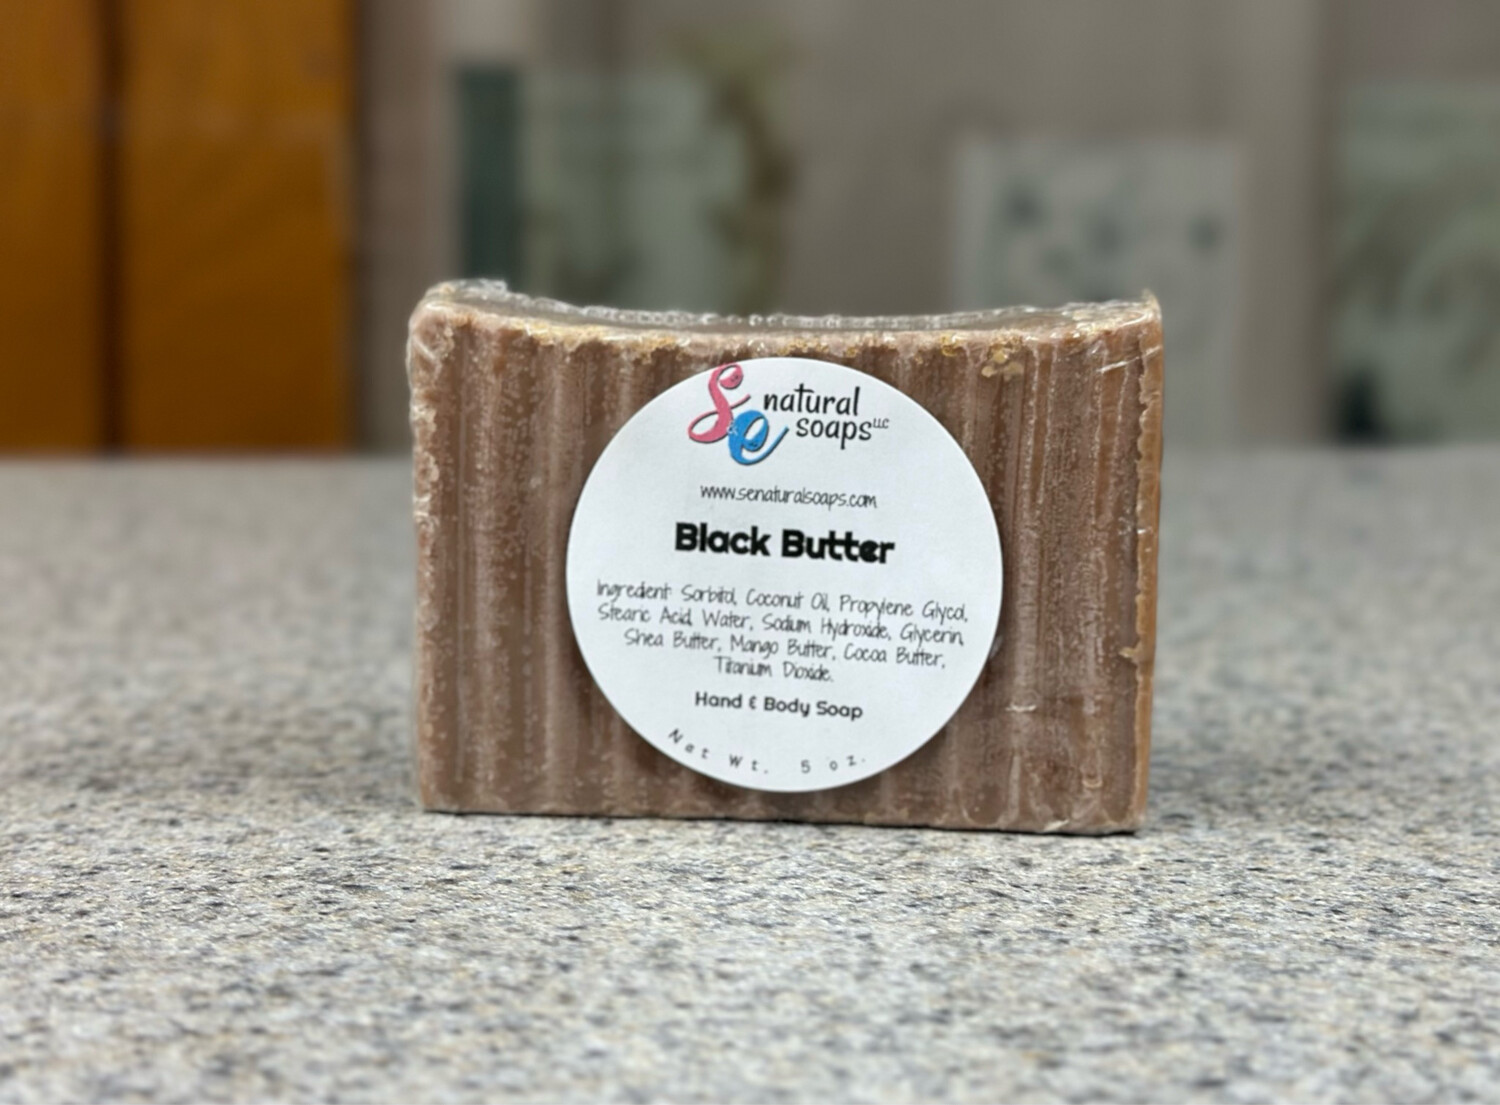 Black Butter soap